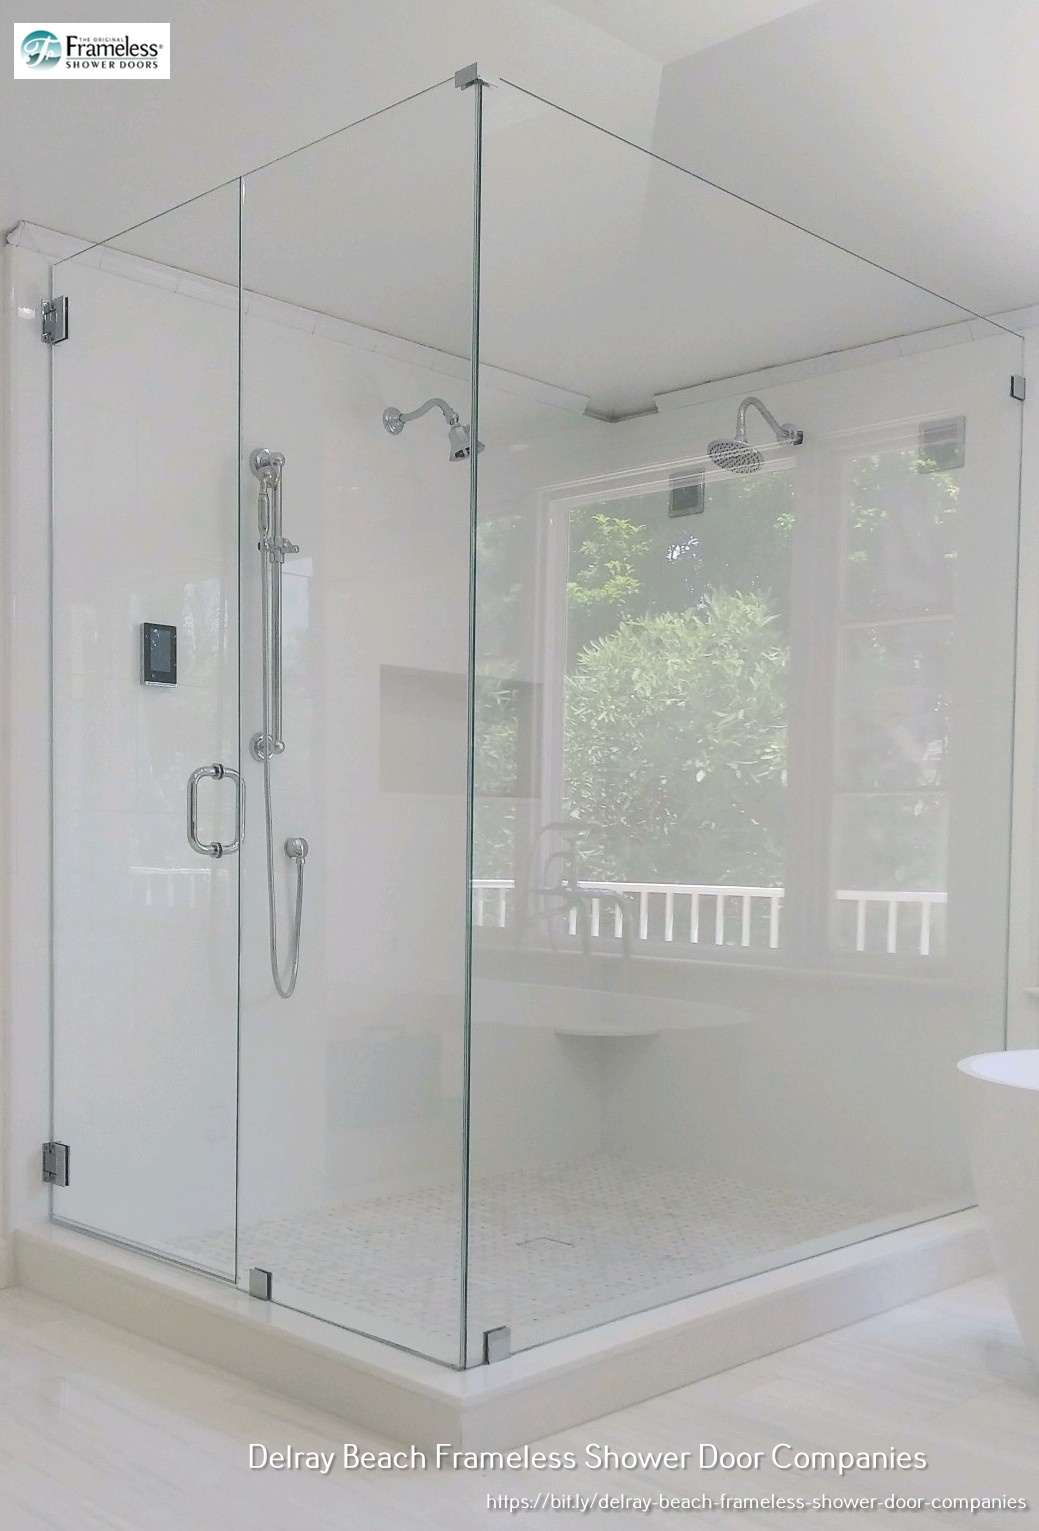 The Original Frameless Shower Doors States the Benefits of Custom Glass Shower Doors